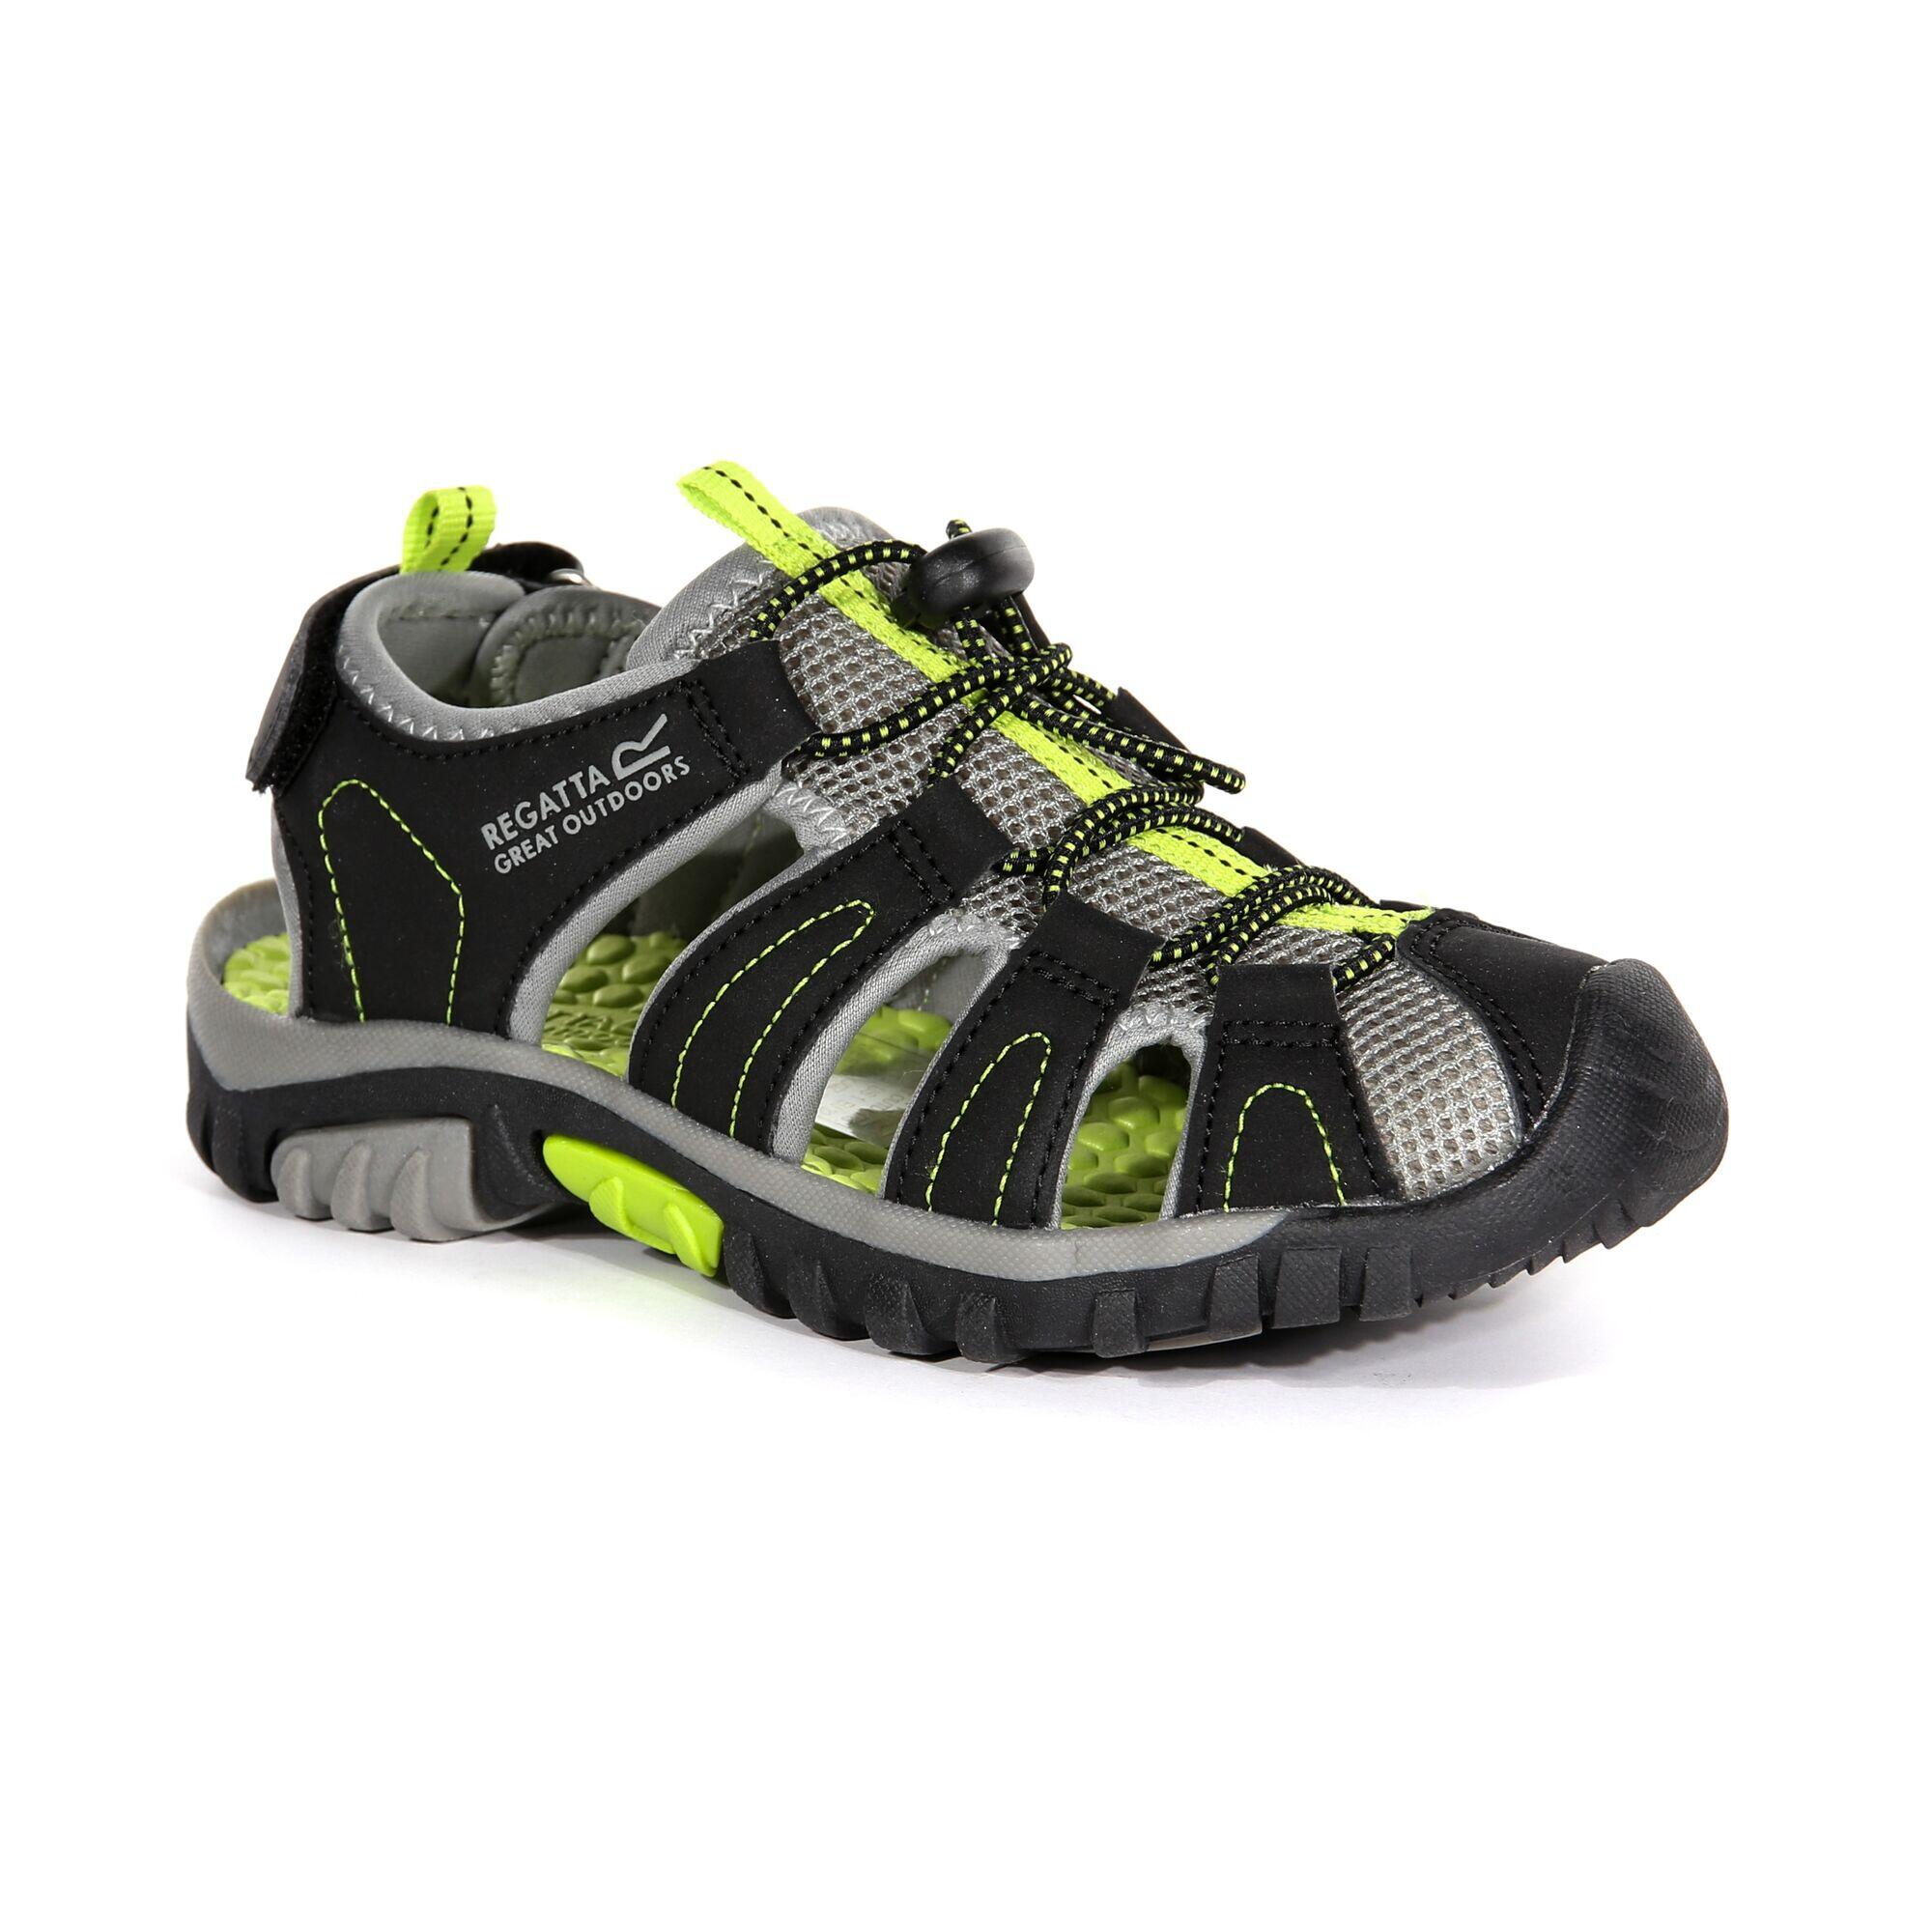 Westshore Junior Kids Walking Sandals - Black / Lime 2/5